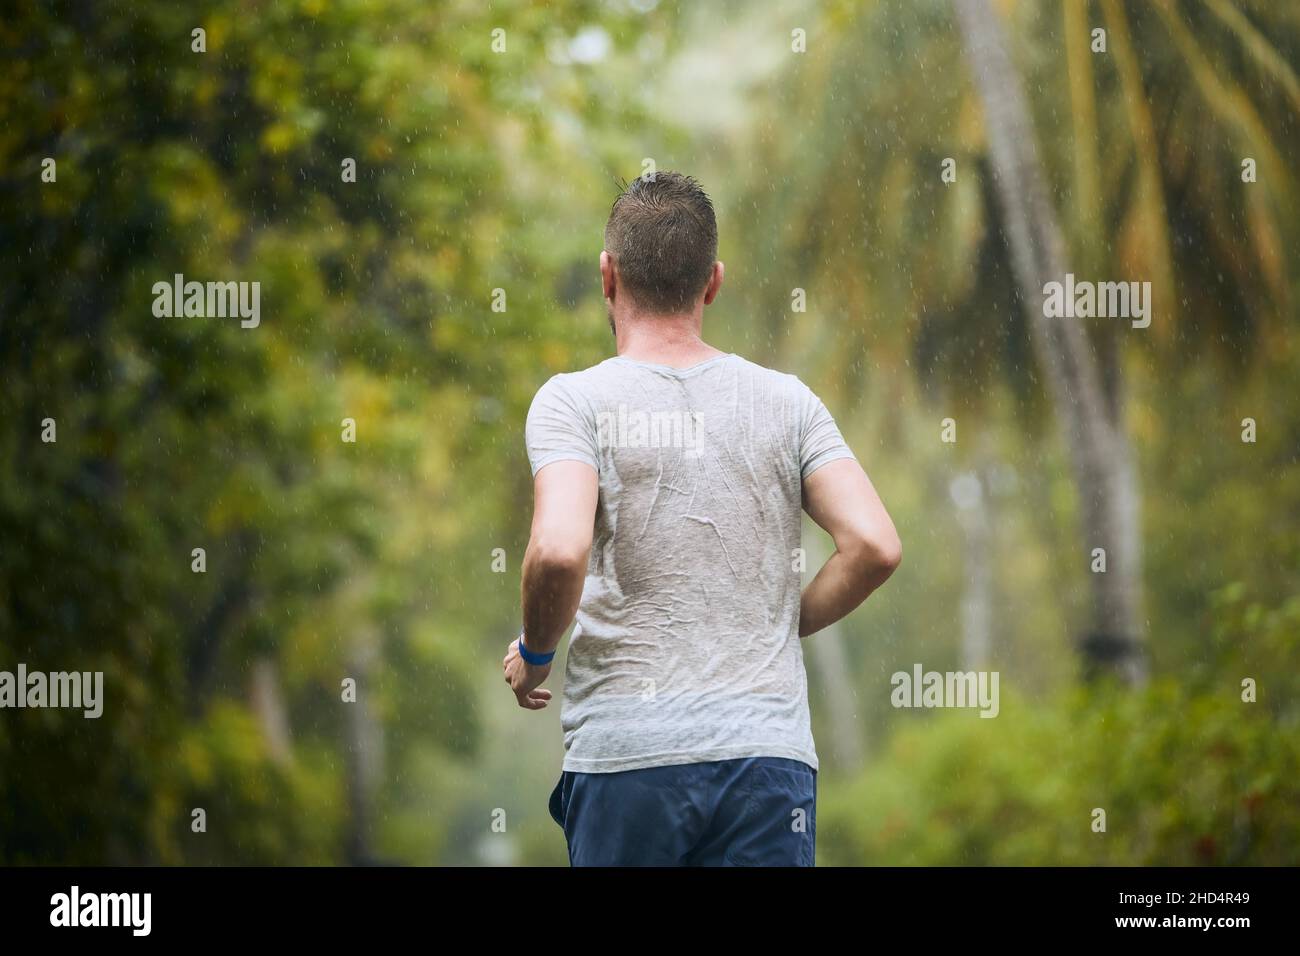 Rückansicht des Laufers bei starkem Regen. Nassen jungen Mann in der Natur rann. Stockfoto